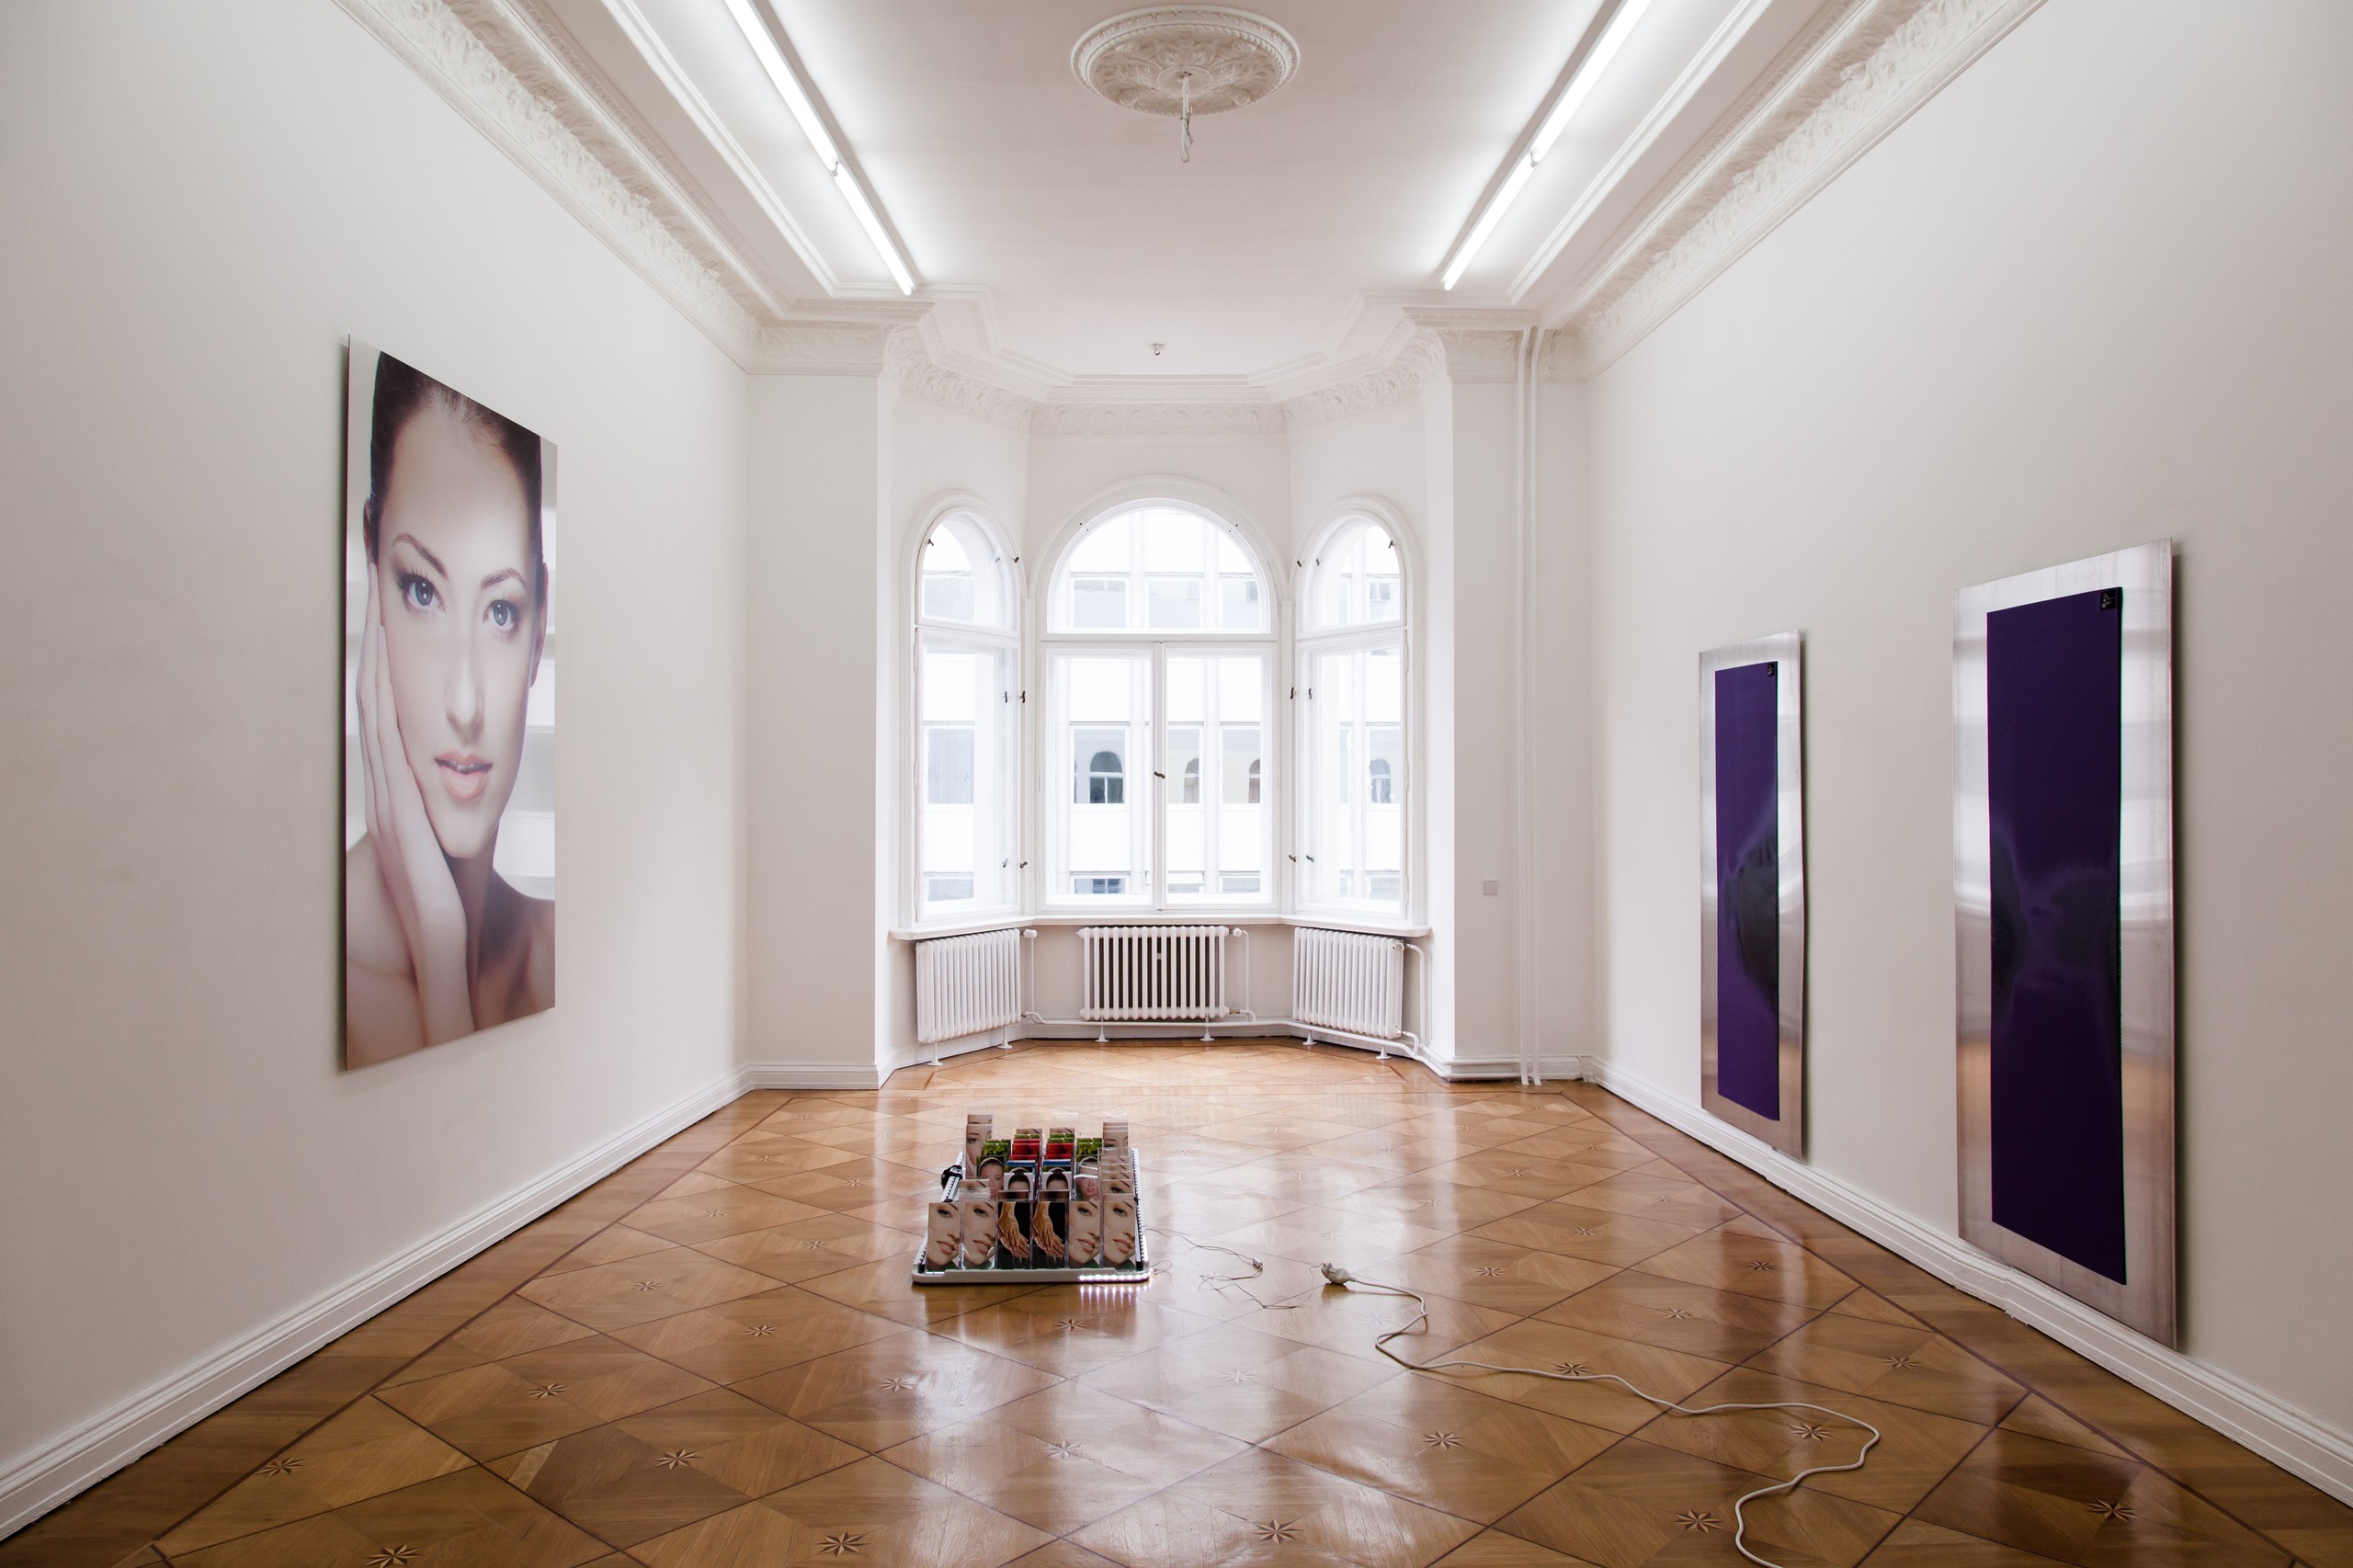 Installation view, Infinite Surrender, Focused Control, Société, Berlin, 2013